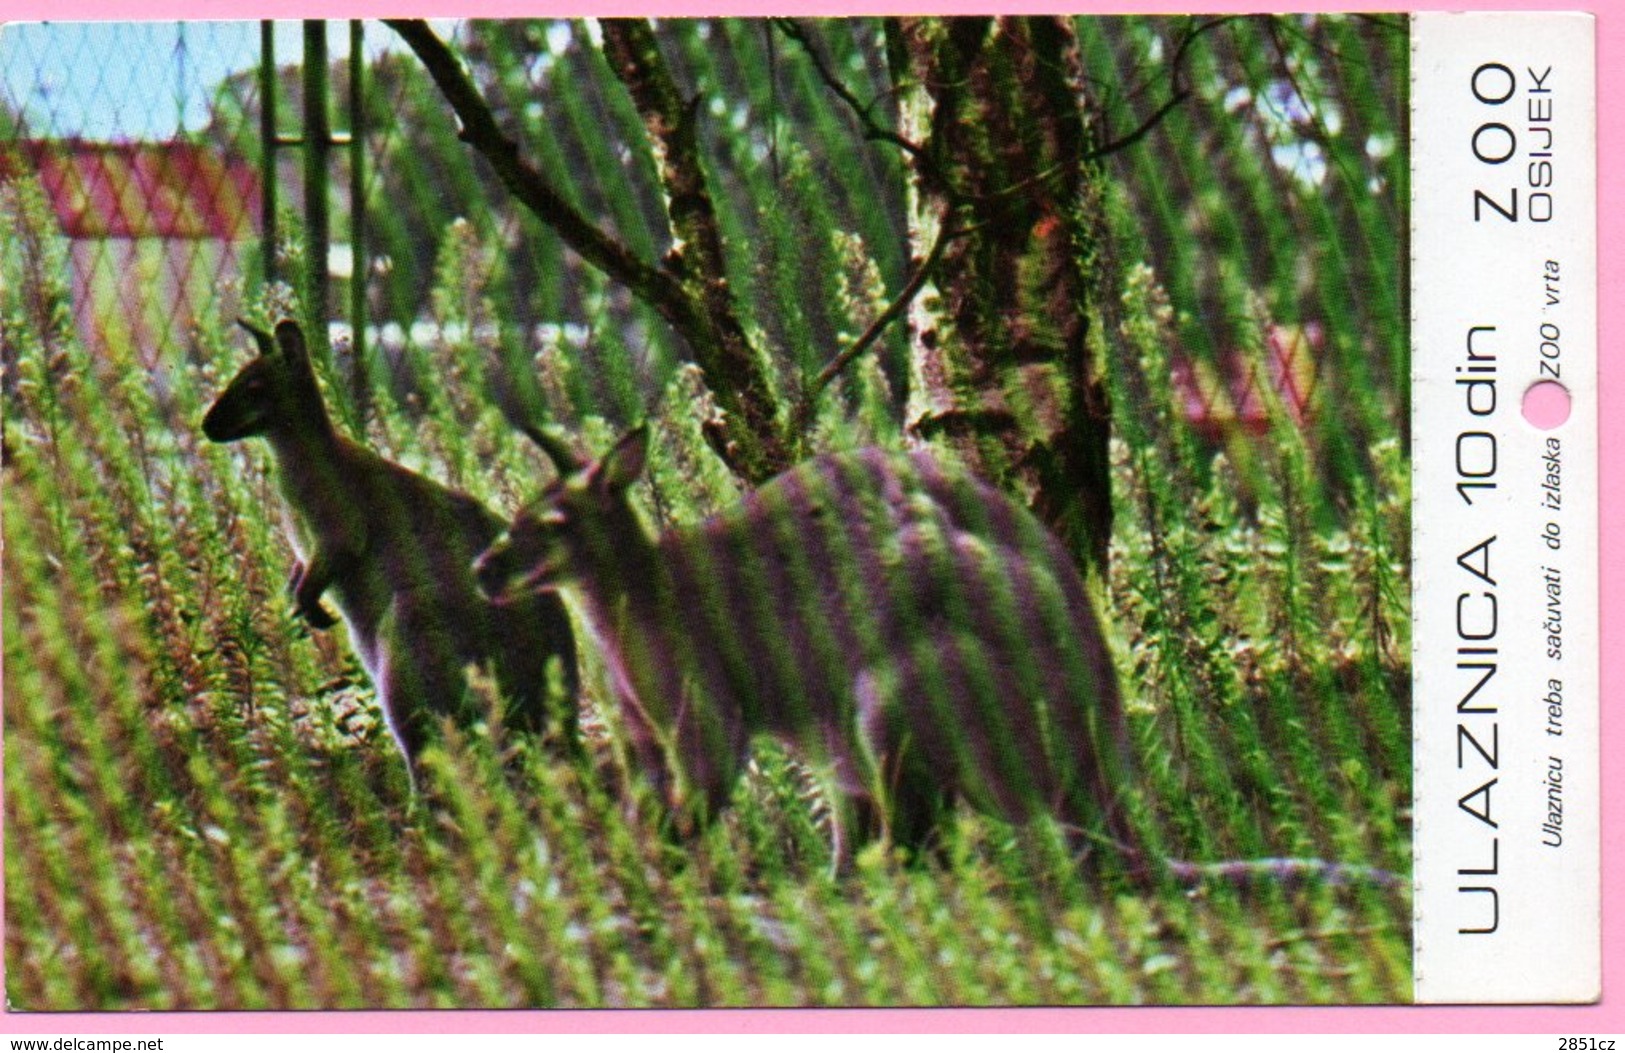 Ticket / Postcard - ZOO Garden -  Red-necked Kangaroo, Osijek, Yugoslavia - Tickets - Vouchers